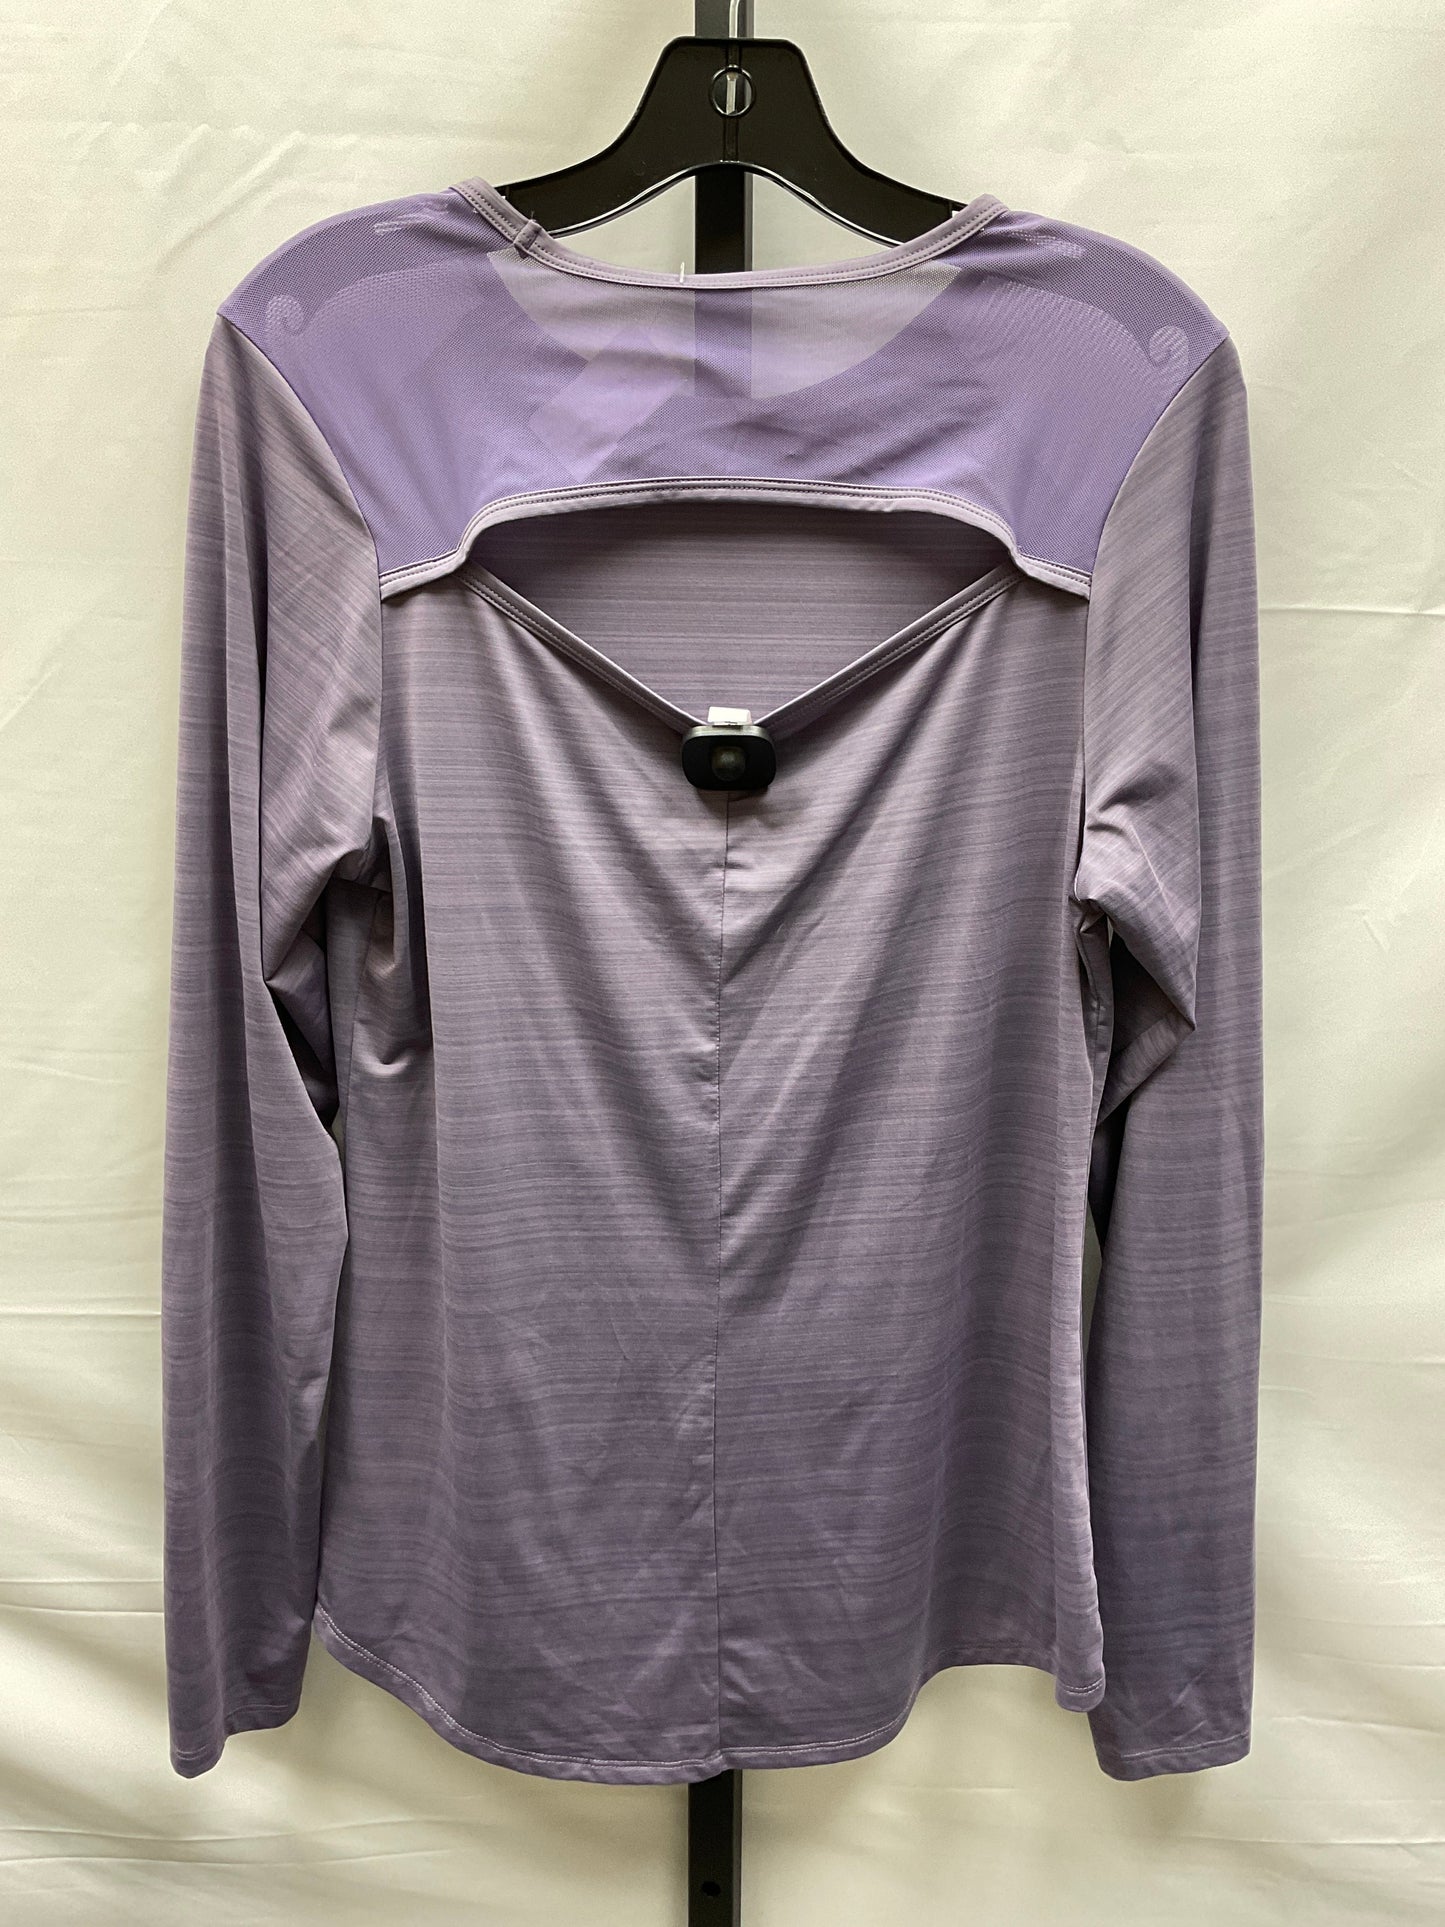 Purple Athletic Top Long Sleeve Crewneck Clothes Mentor, Size M